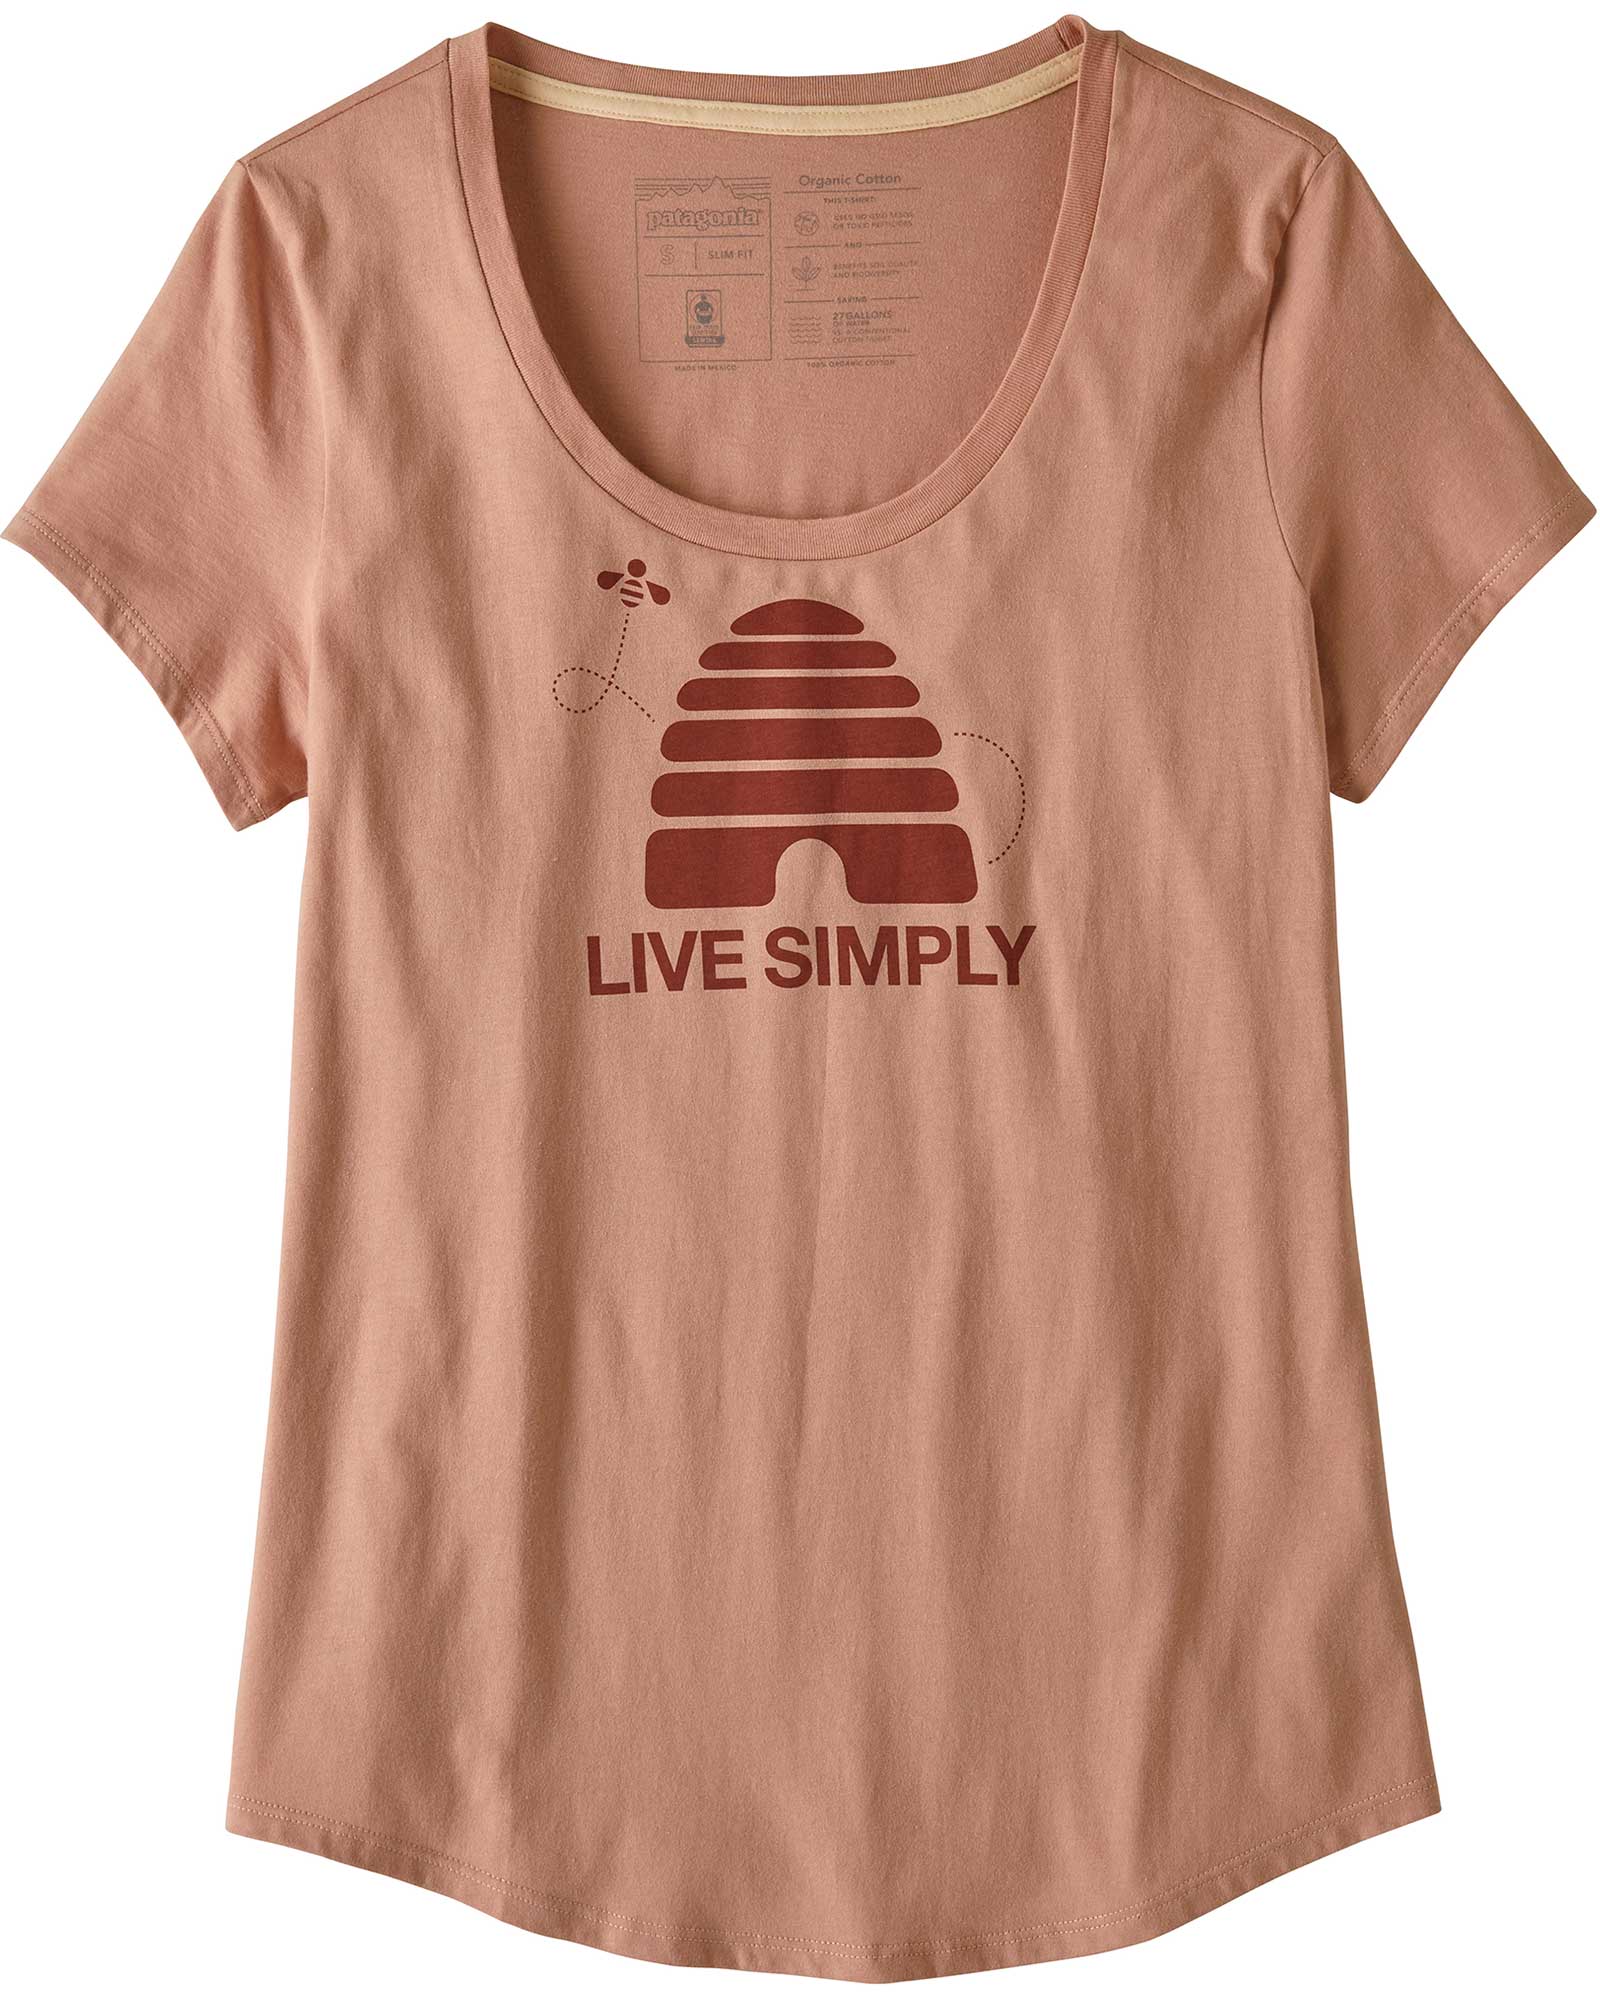 Patagonia Live Simply Hive Organic Women’s Scoop T Shirt - Scotch Pink L